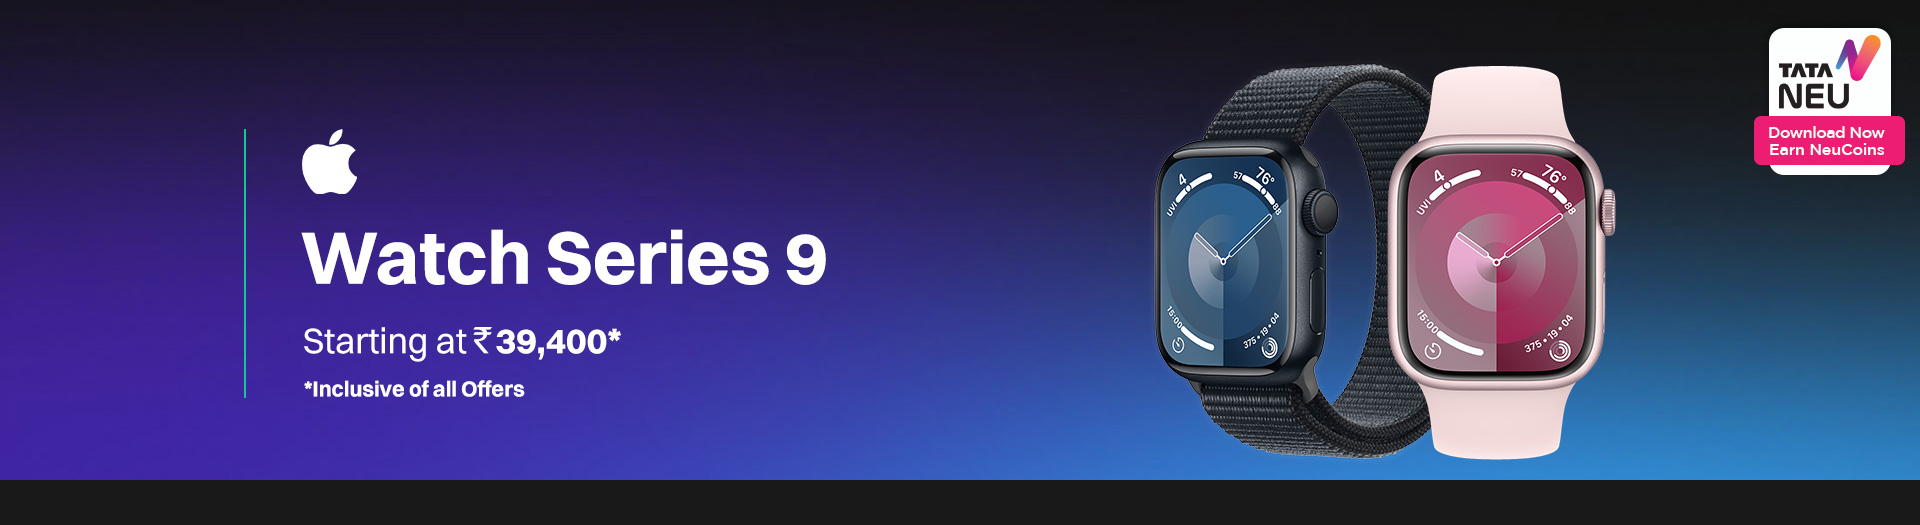 croma.com - Apple Watch Series 9